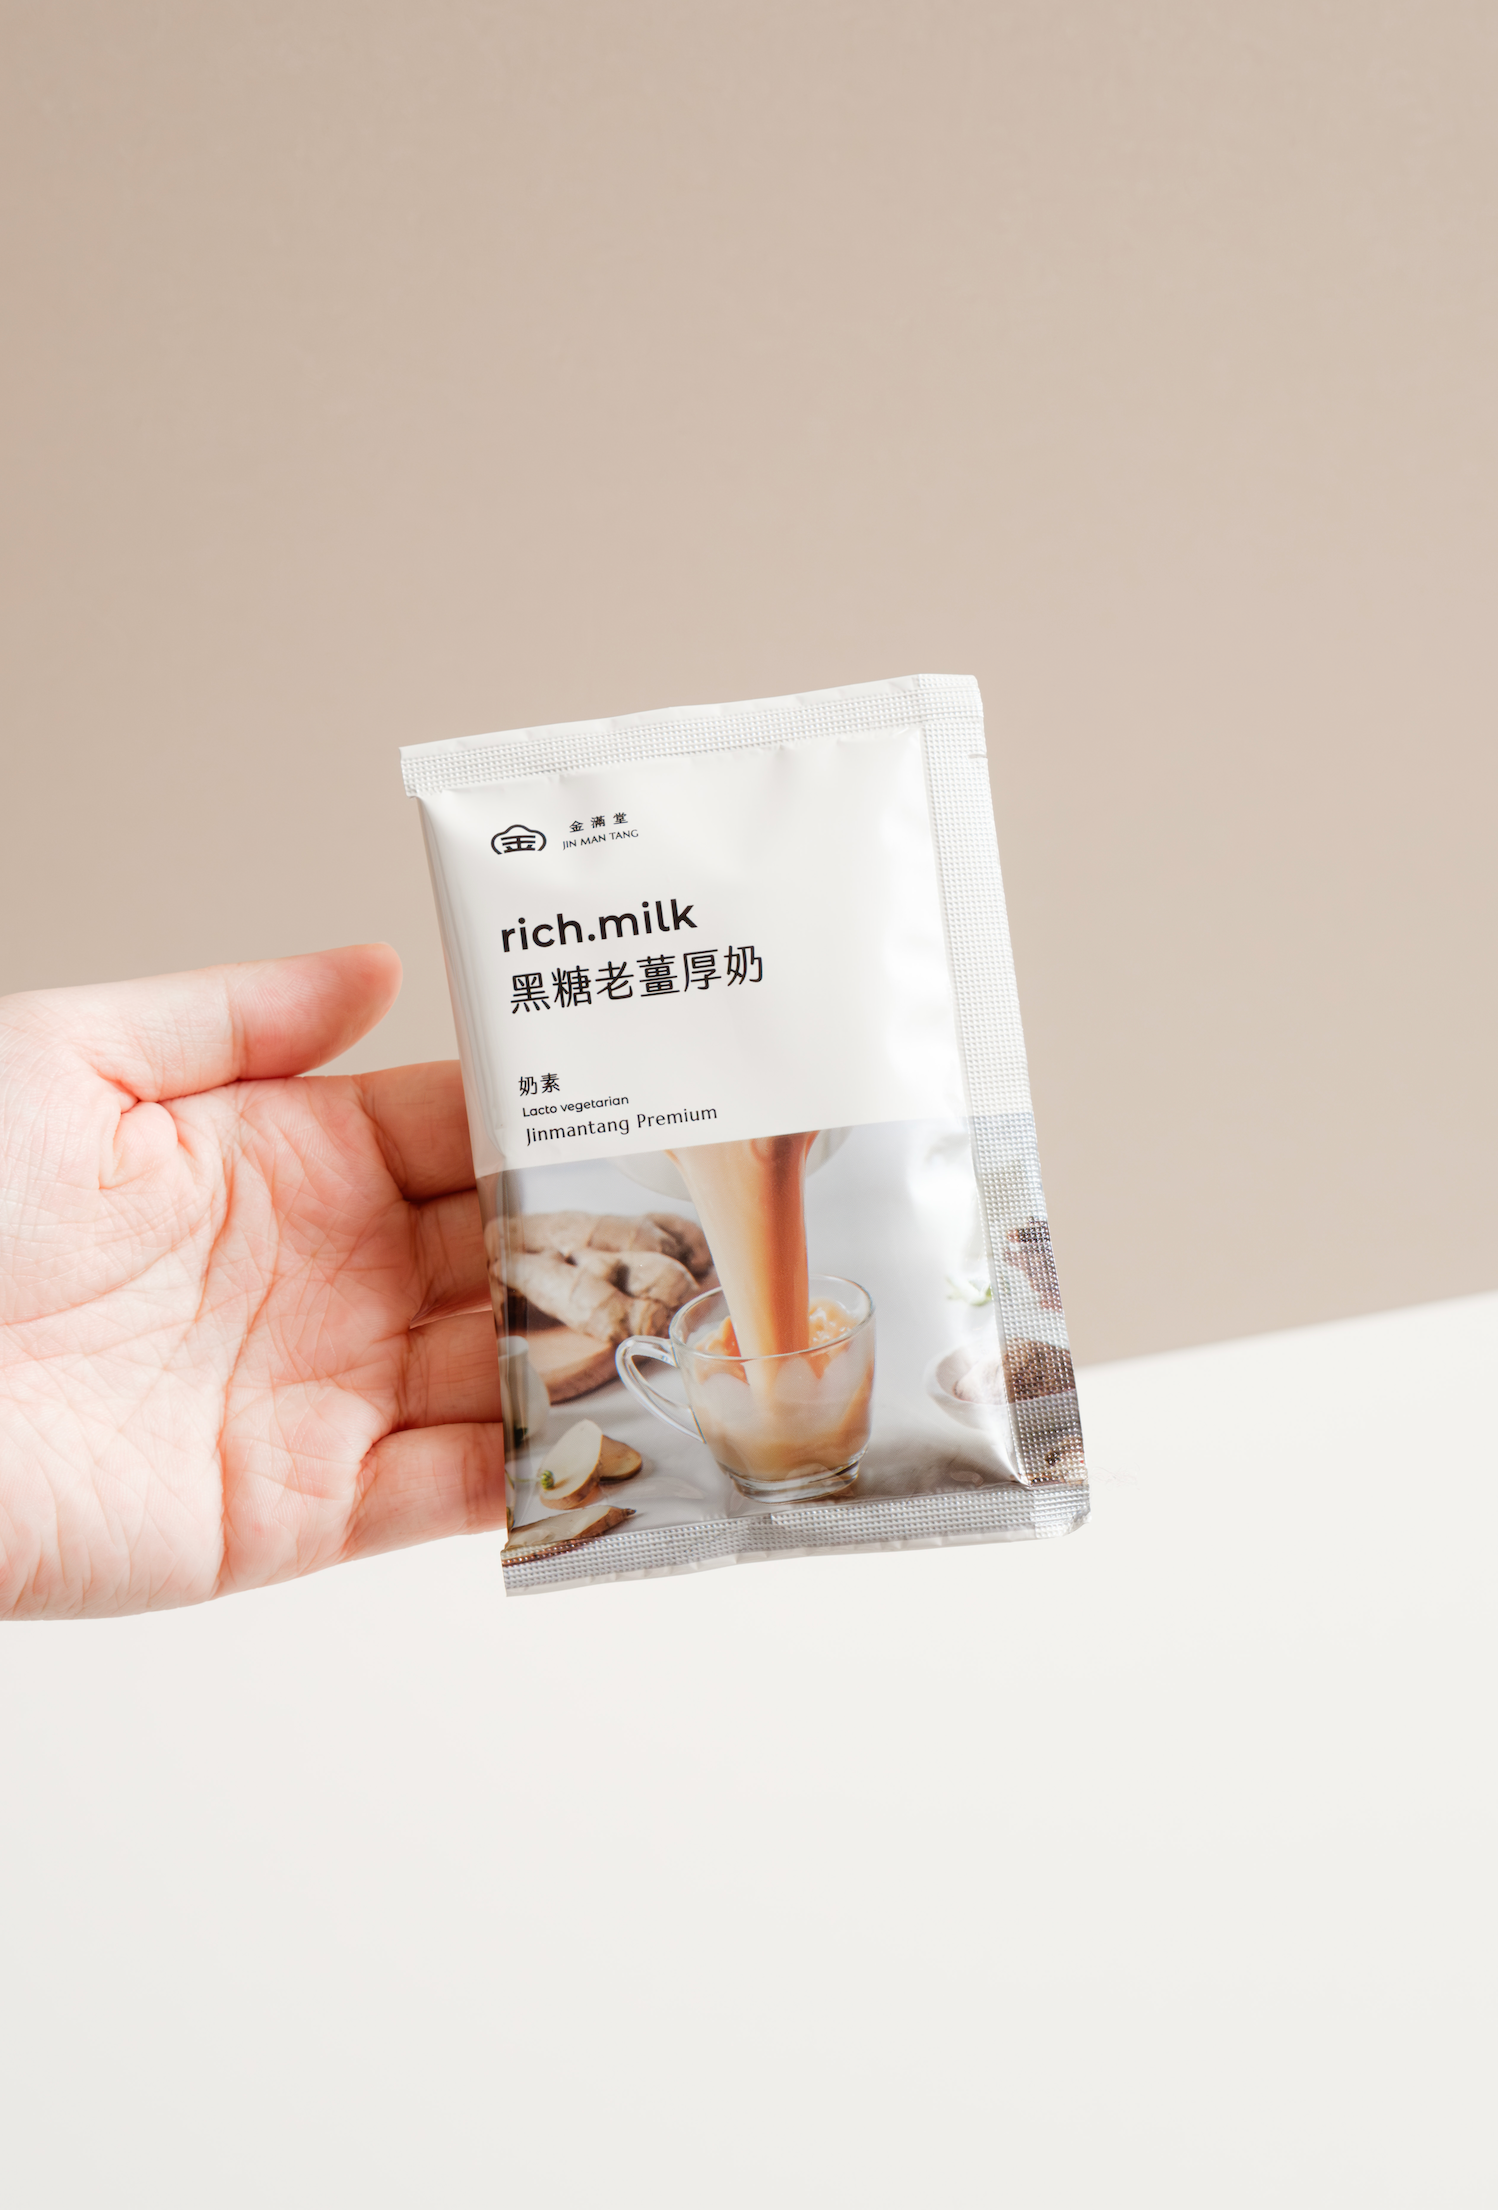 Jin Man Tang【Rich.Milk】Brown Sugar with Old Ginger Milk Tea (25g x 8) / pack